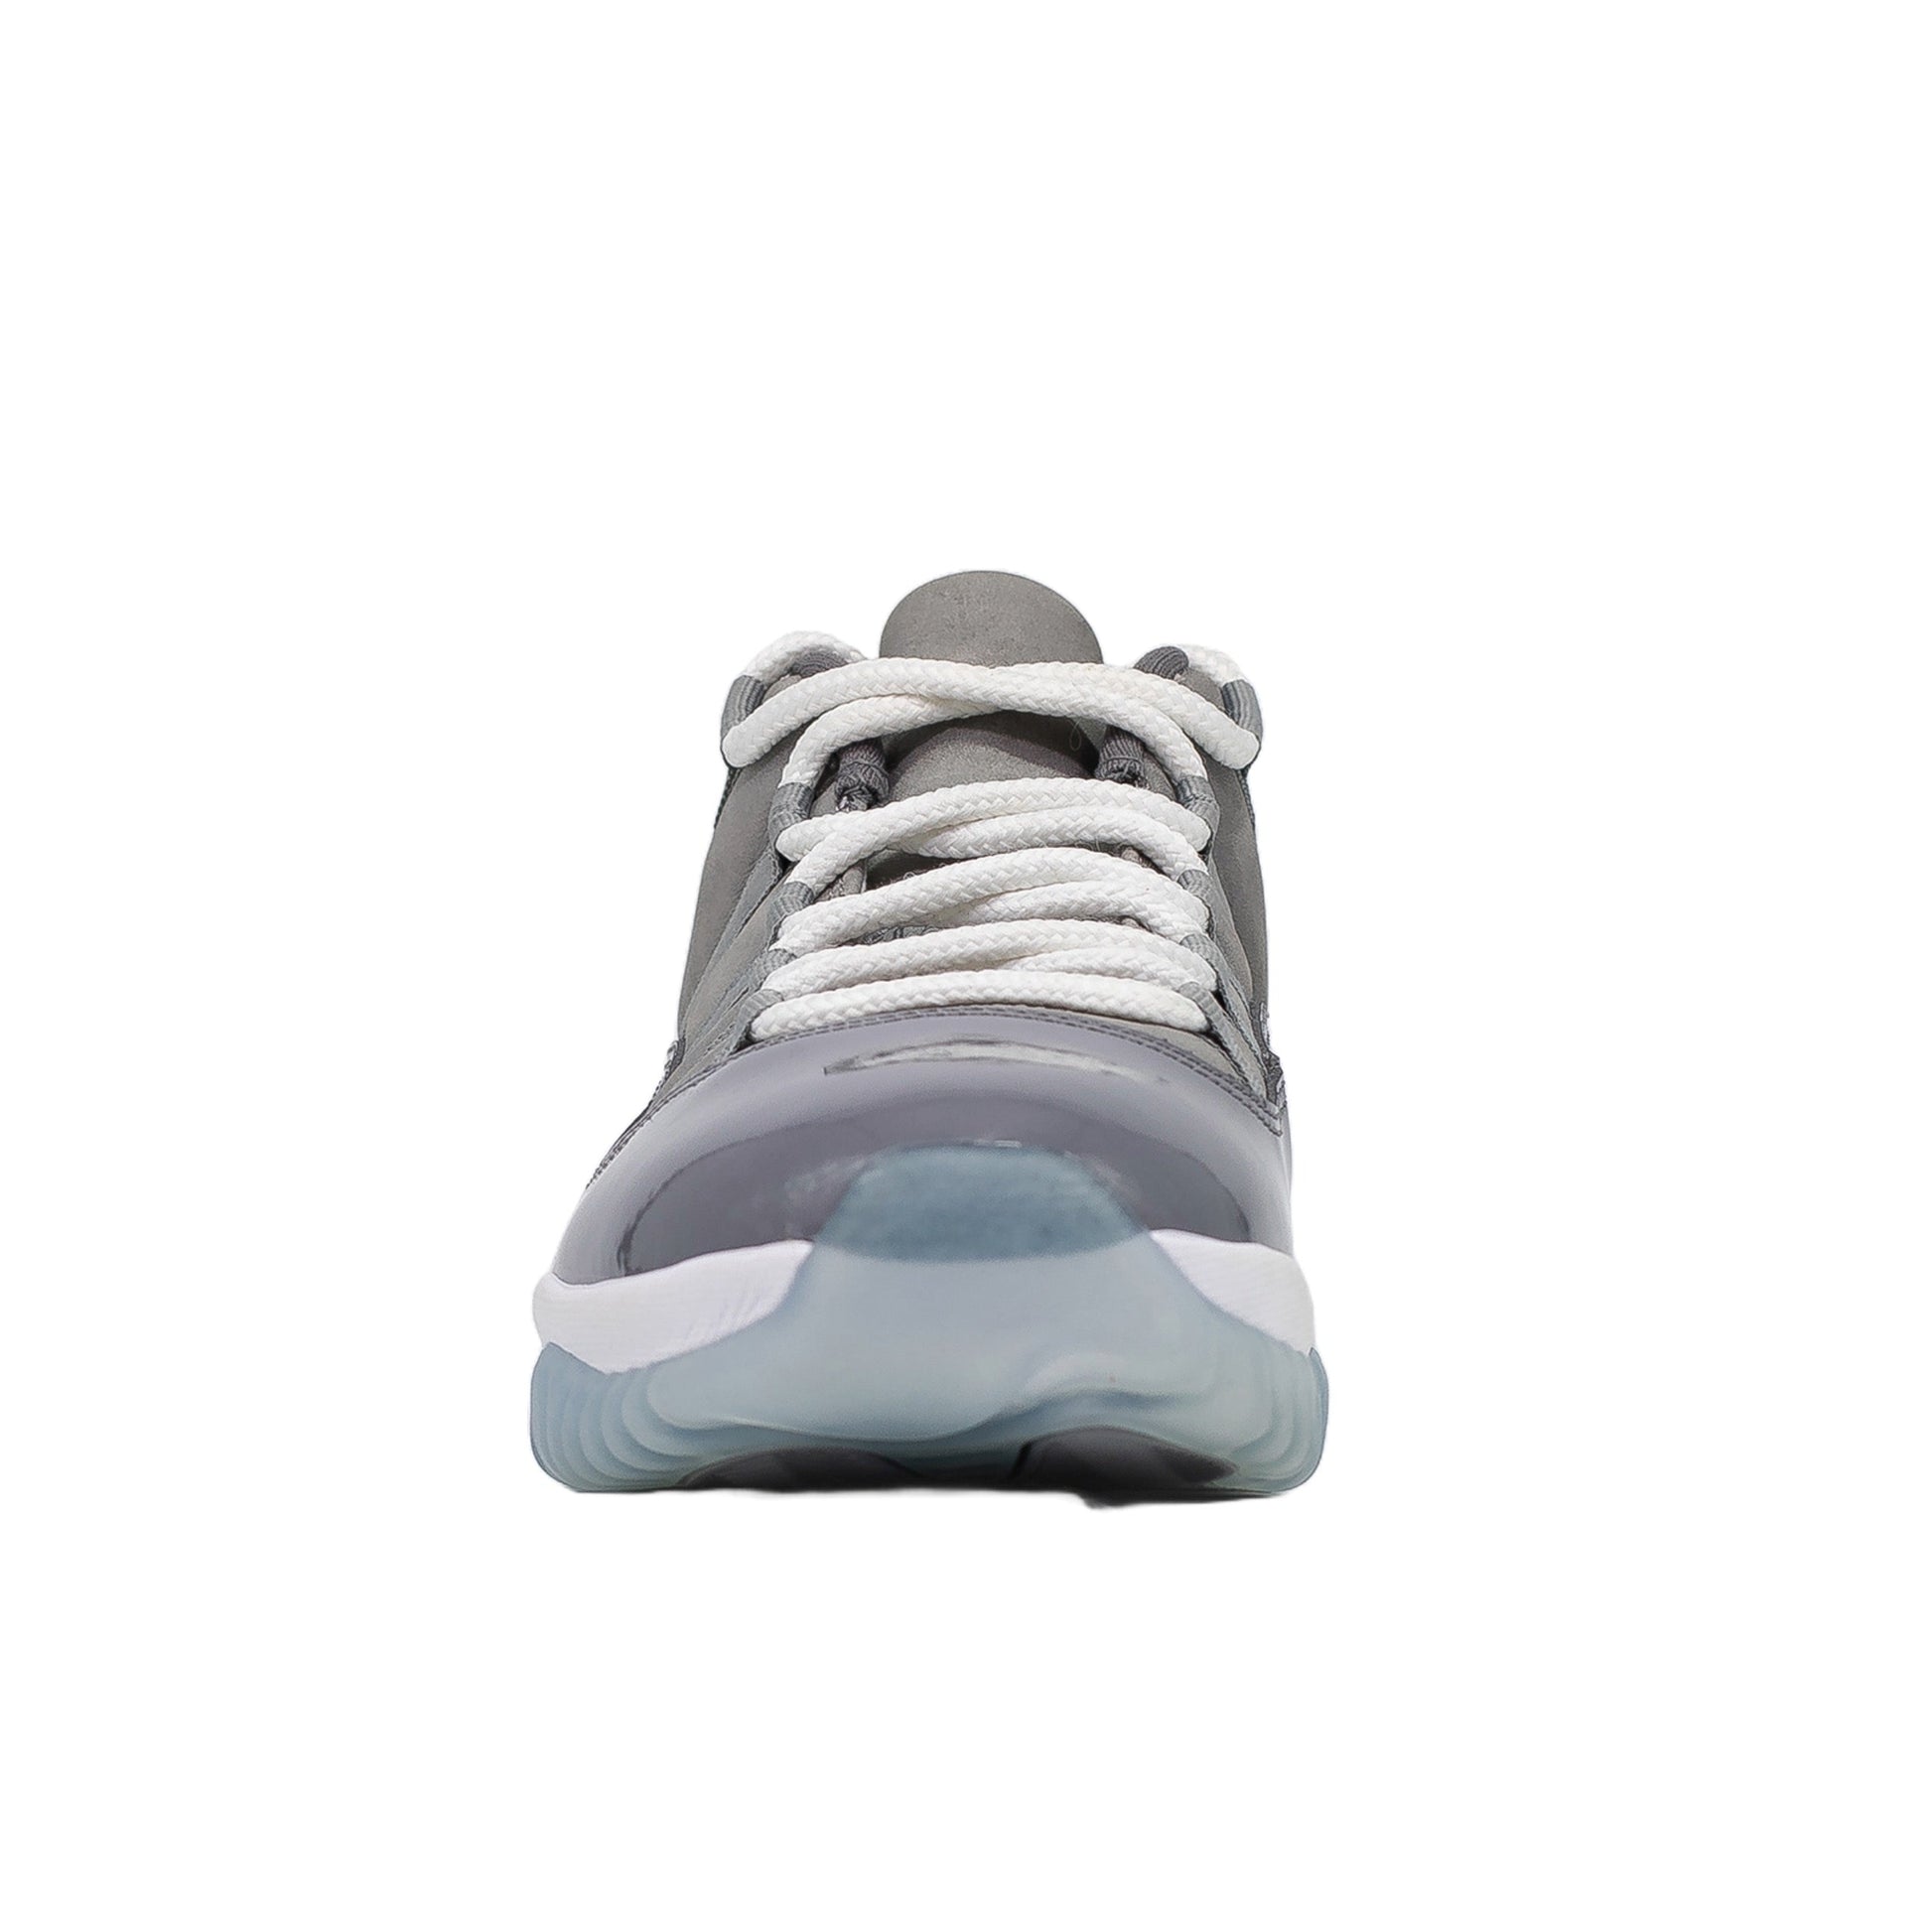 Nike Air Jordan 20 OG East Coast Chutney White Black 310455-711